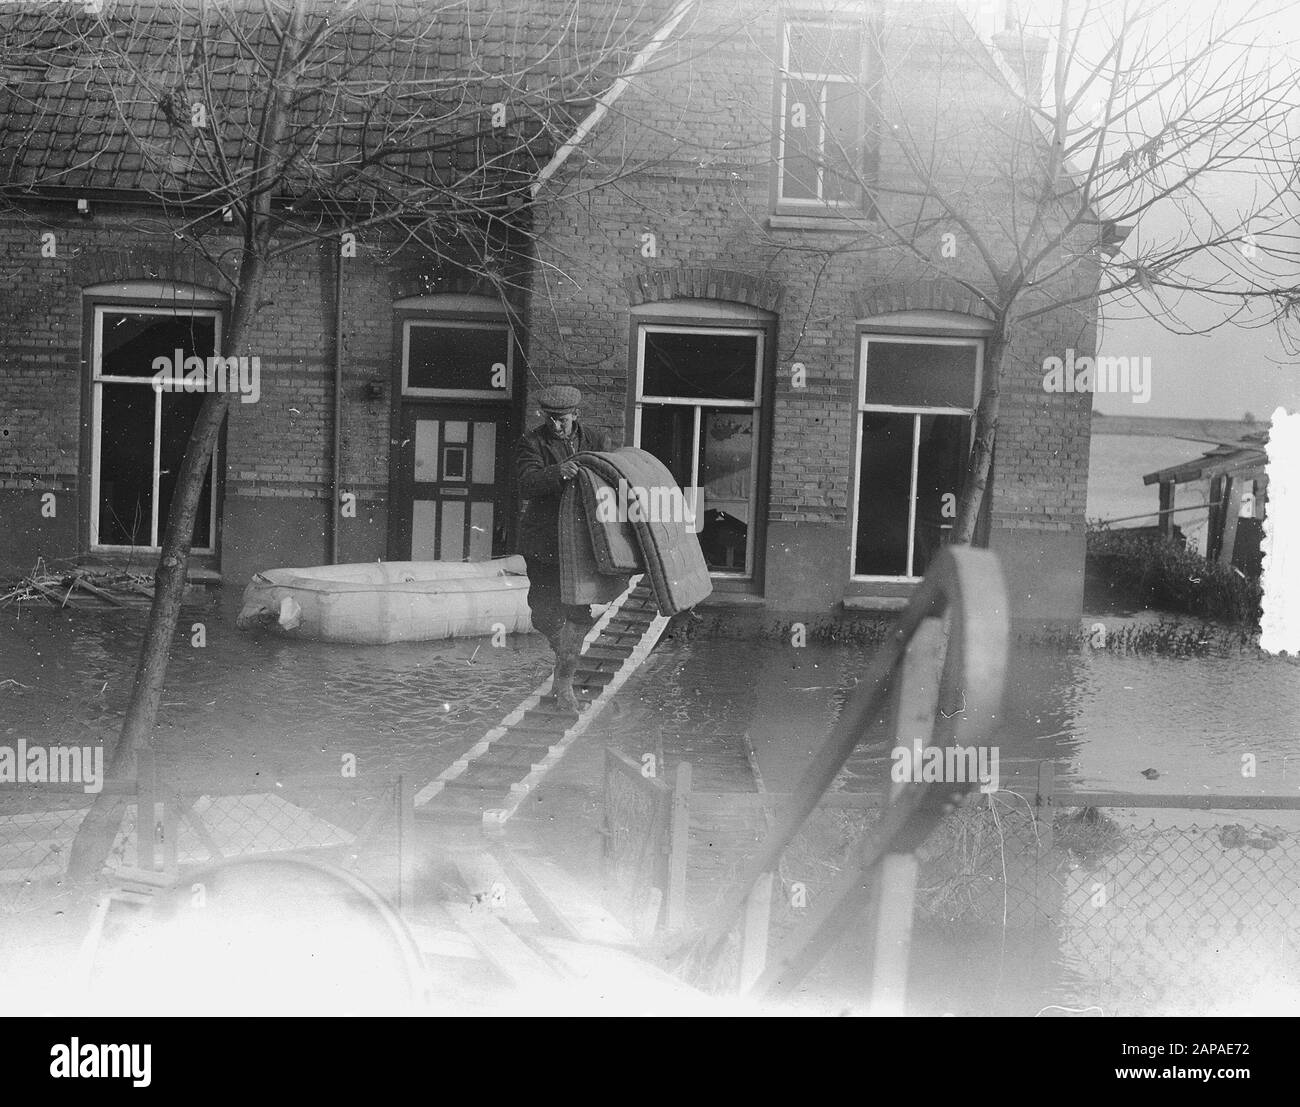 Watersnood 1953 Descrizione: Boer prende materassi da casa Stavenisse Data: 5 Febbraio 1953 Località: Stavenisse, Zeeland Parole Chiave: Hooks, MATRRENS Foto Stock